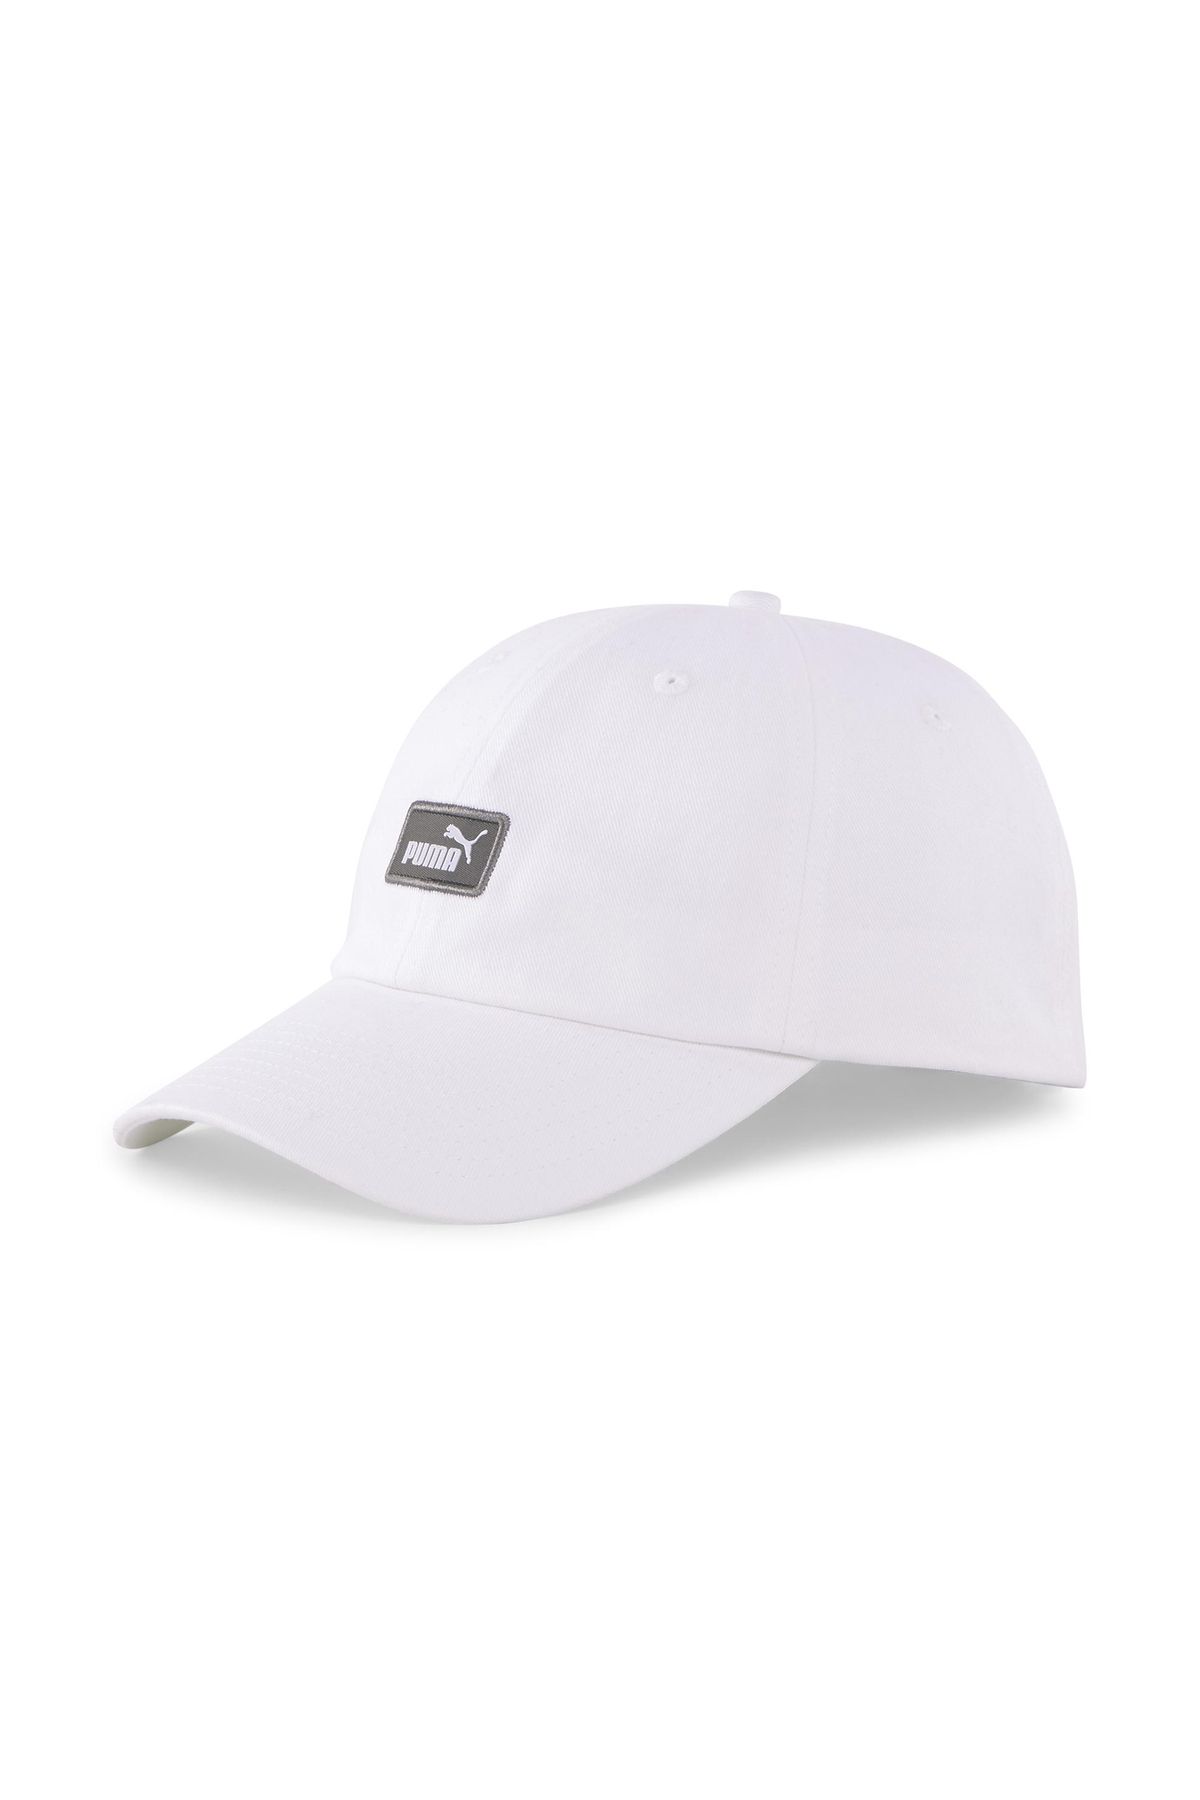 Puma Ess Cap III Şapka 2366902 Beyaz